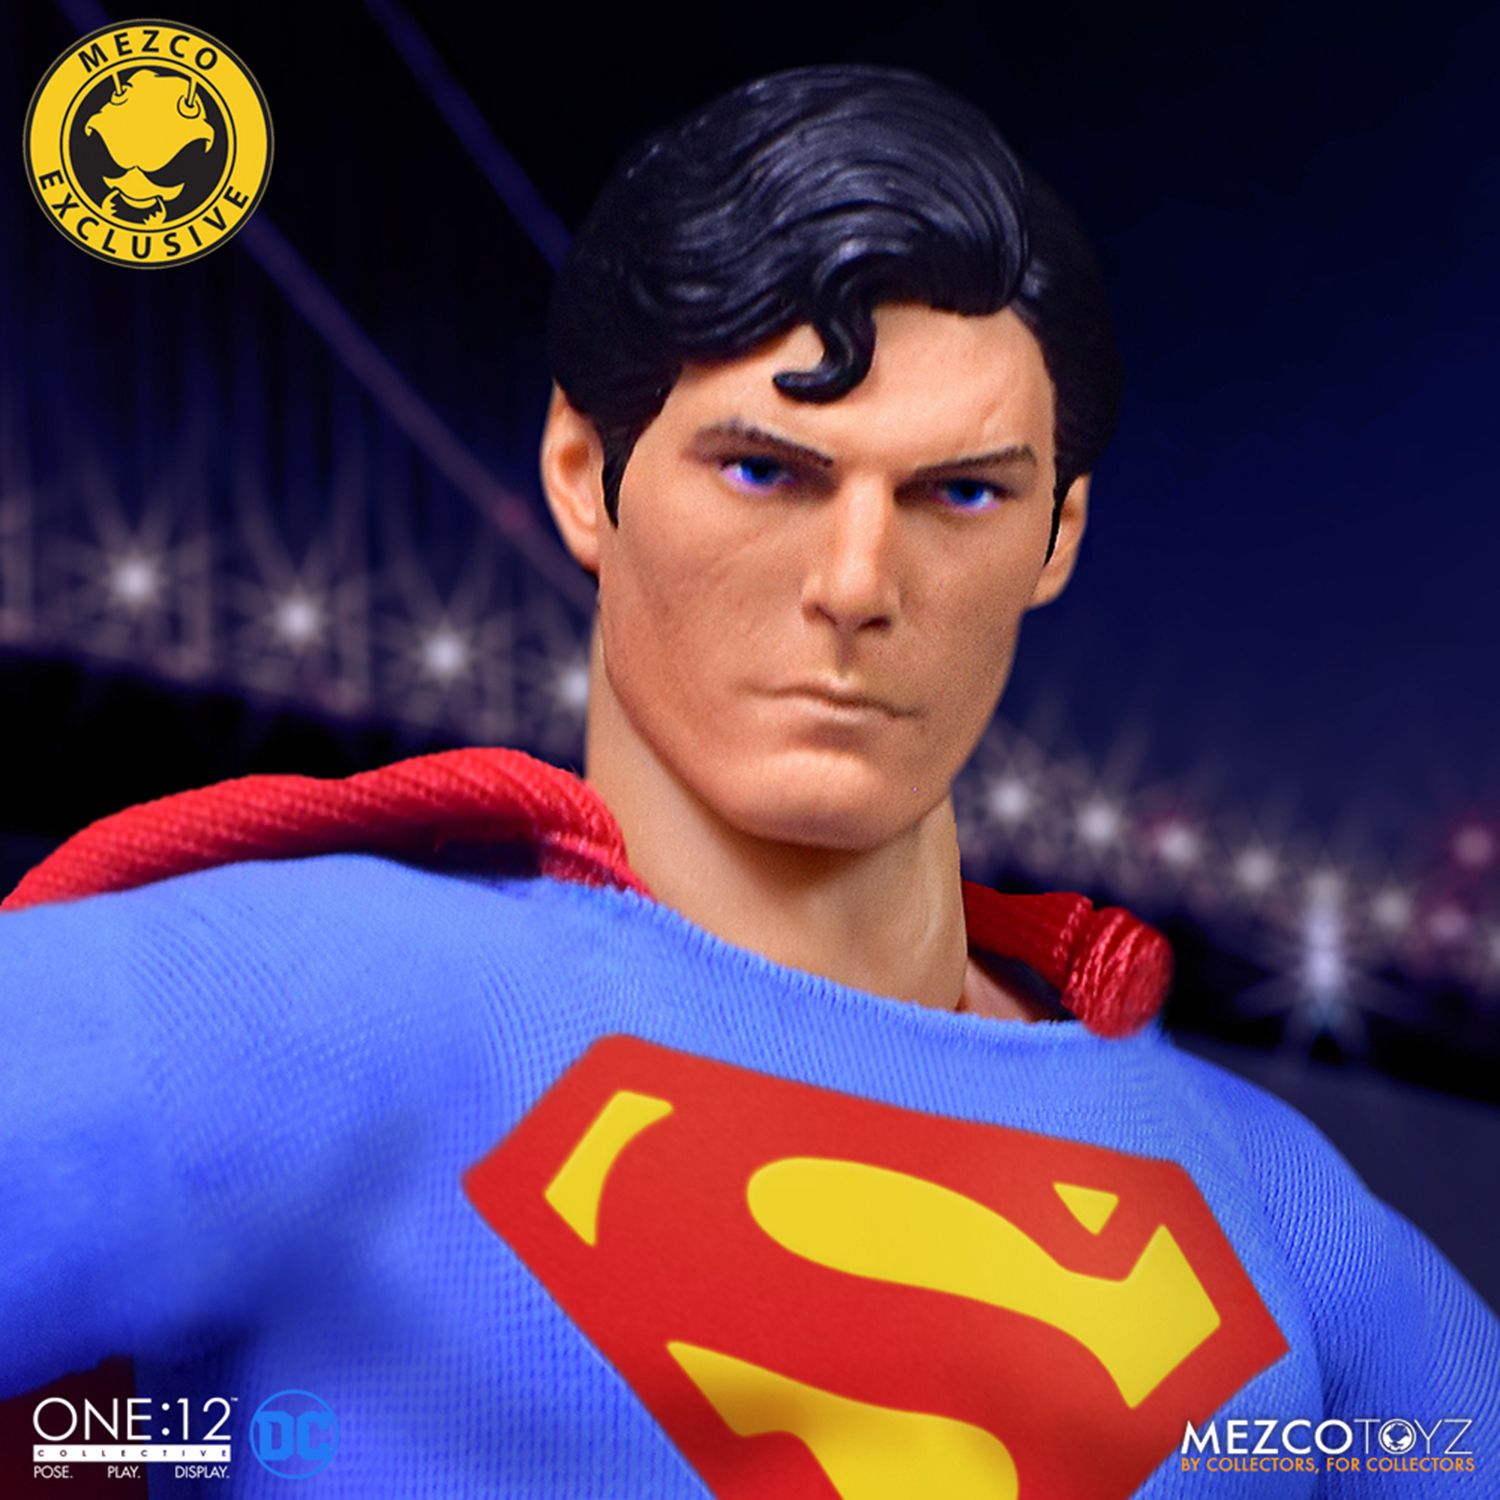 mezco one twelfth collective superman 1978 Christopher Reeve edition figure movie headsculpt